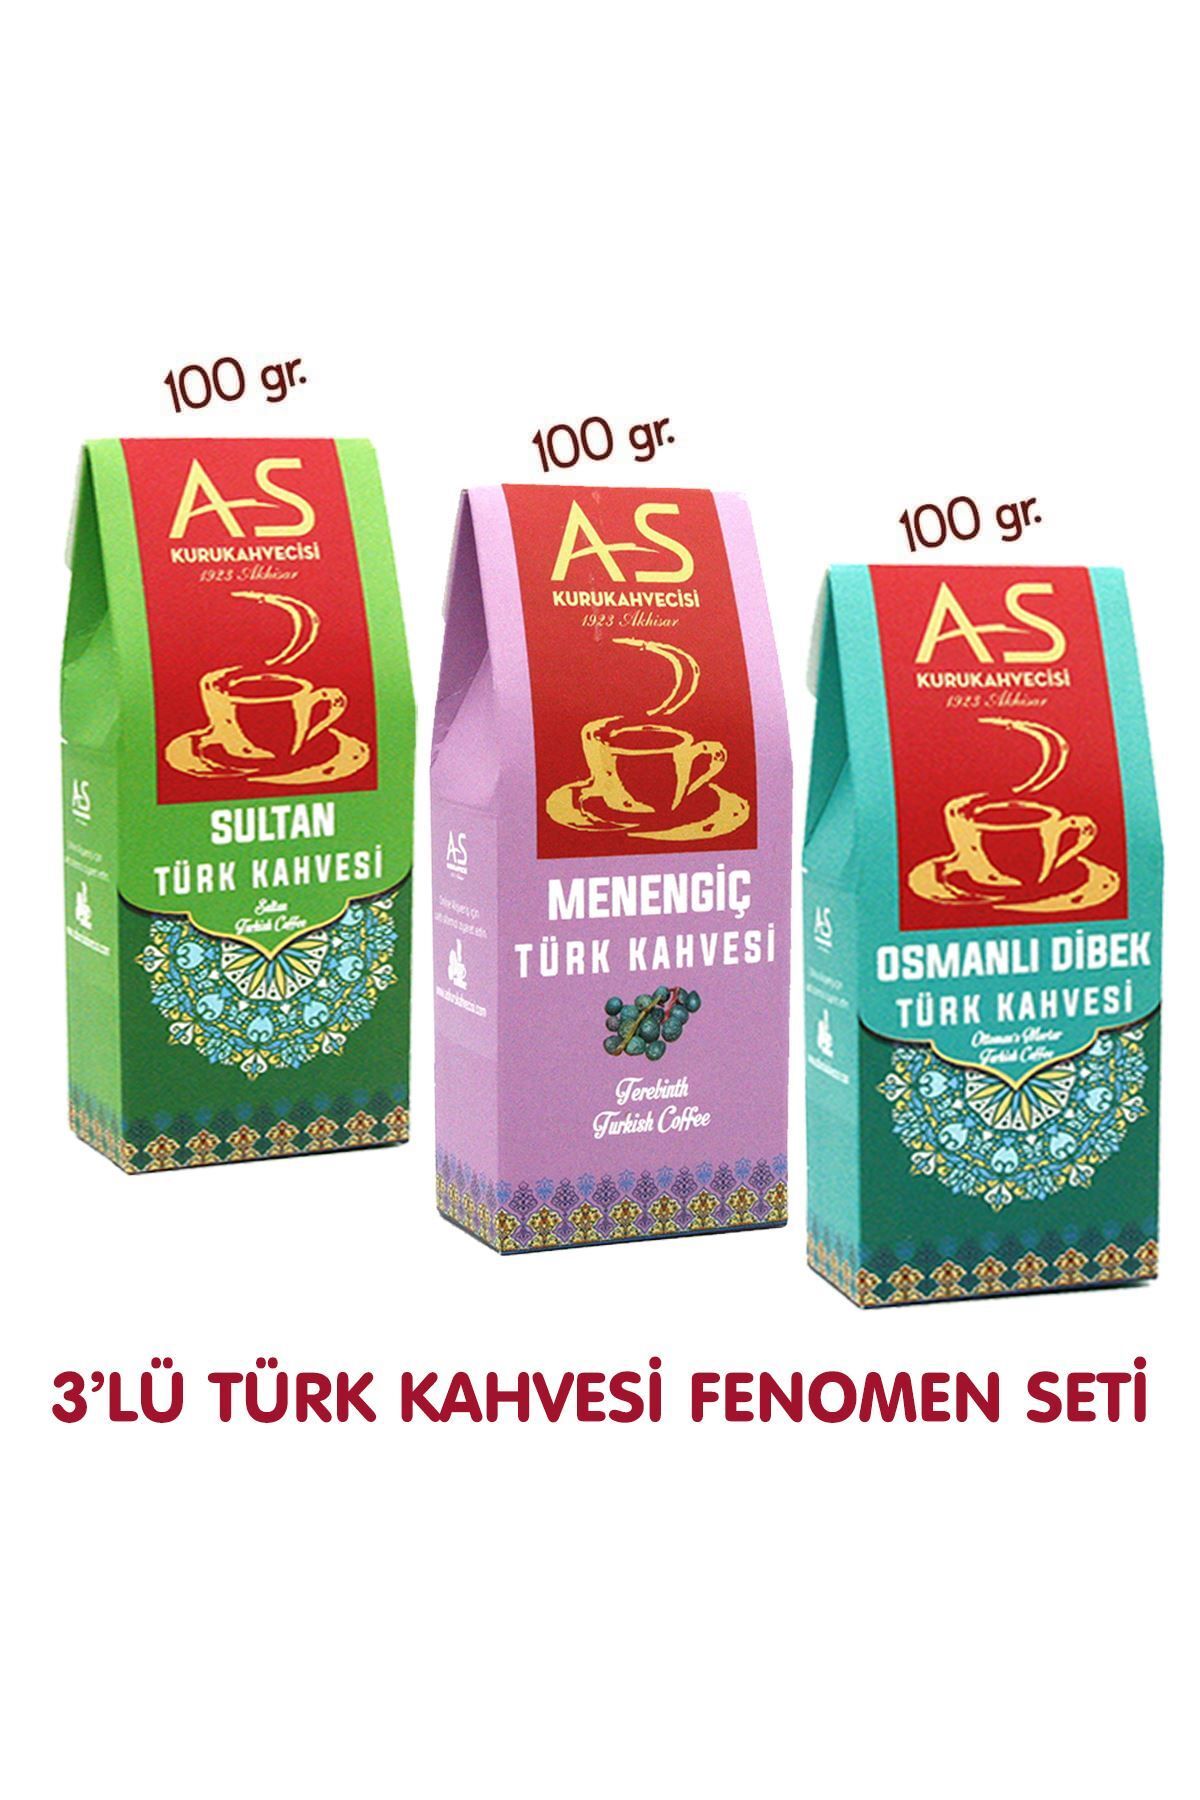 AS Kurukahvecisi 3'lü Türk Kahvesi Fenomen Seti (sultan,menengiç,dibek)